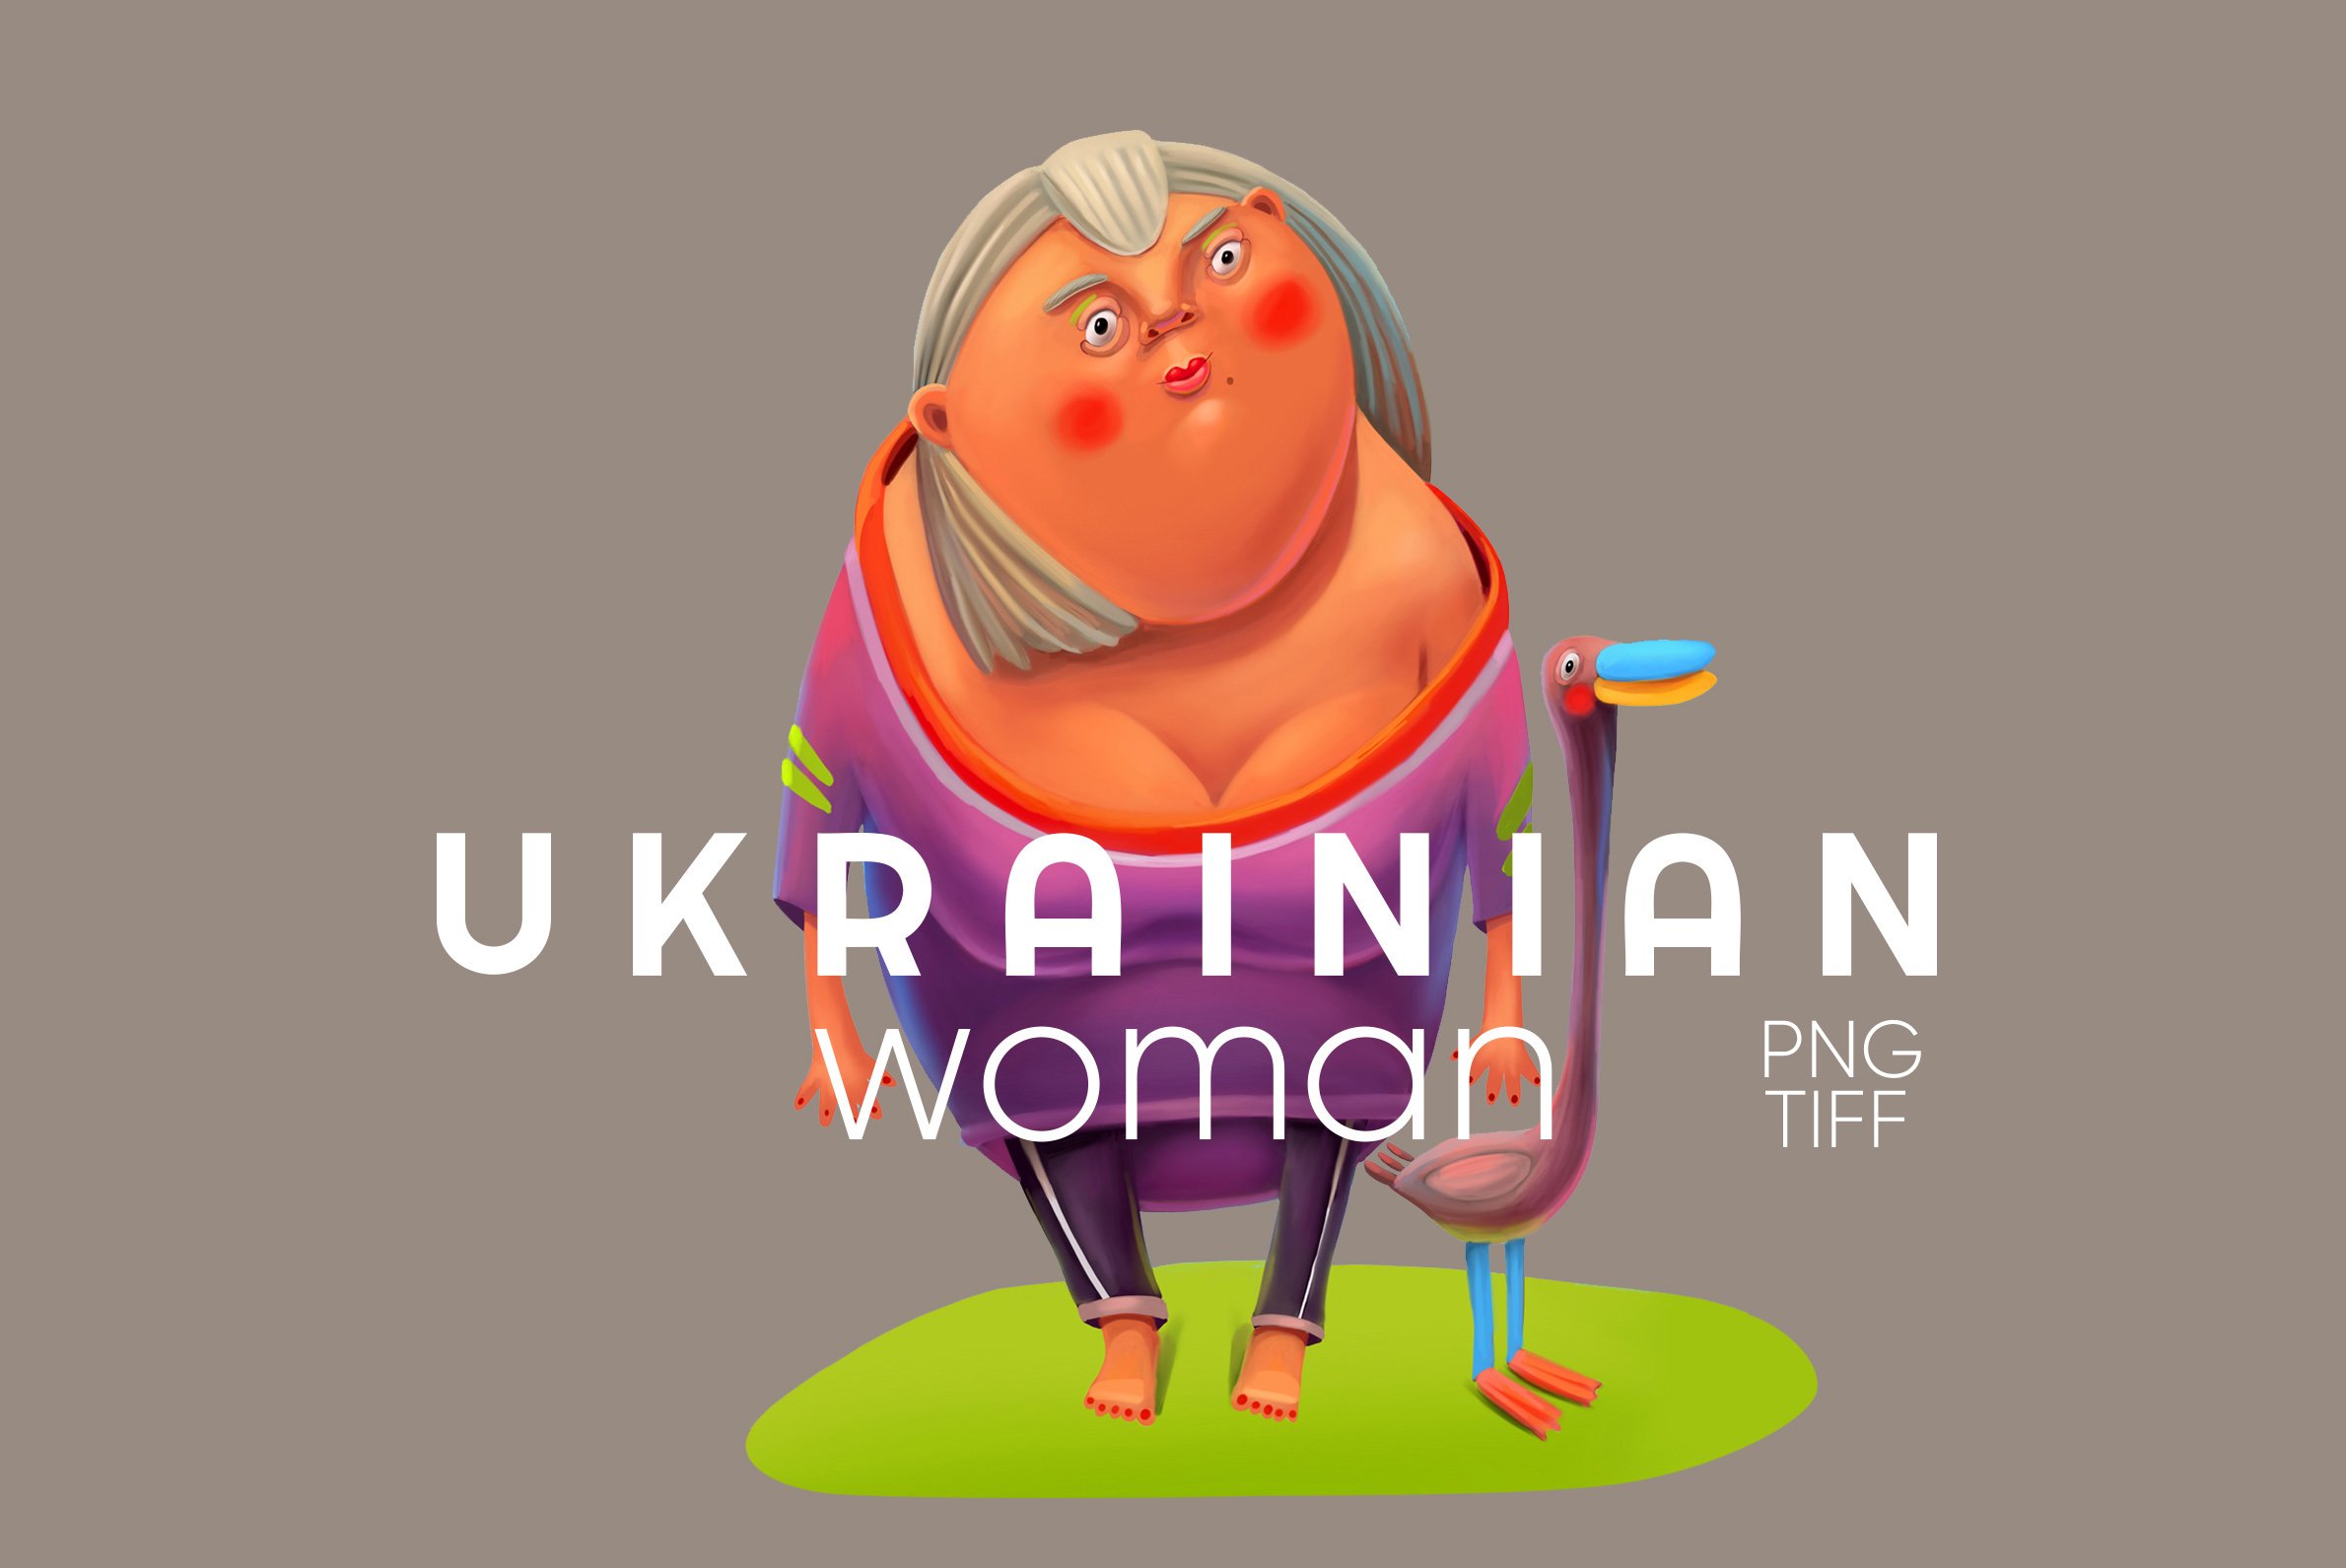 Ukrainian woman cover image.